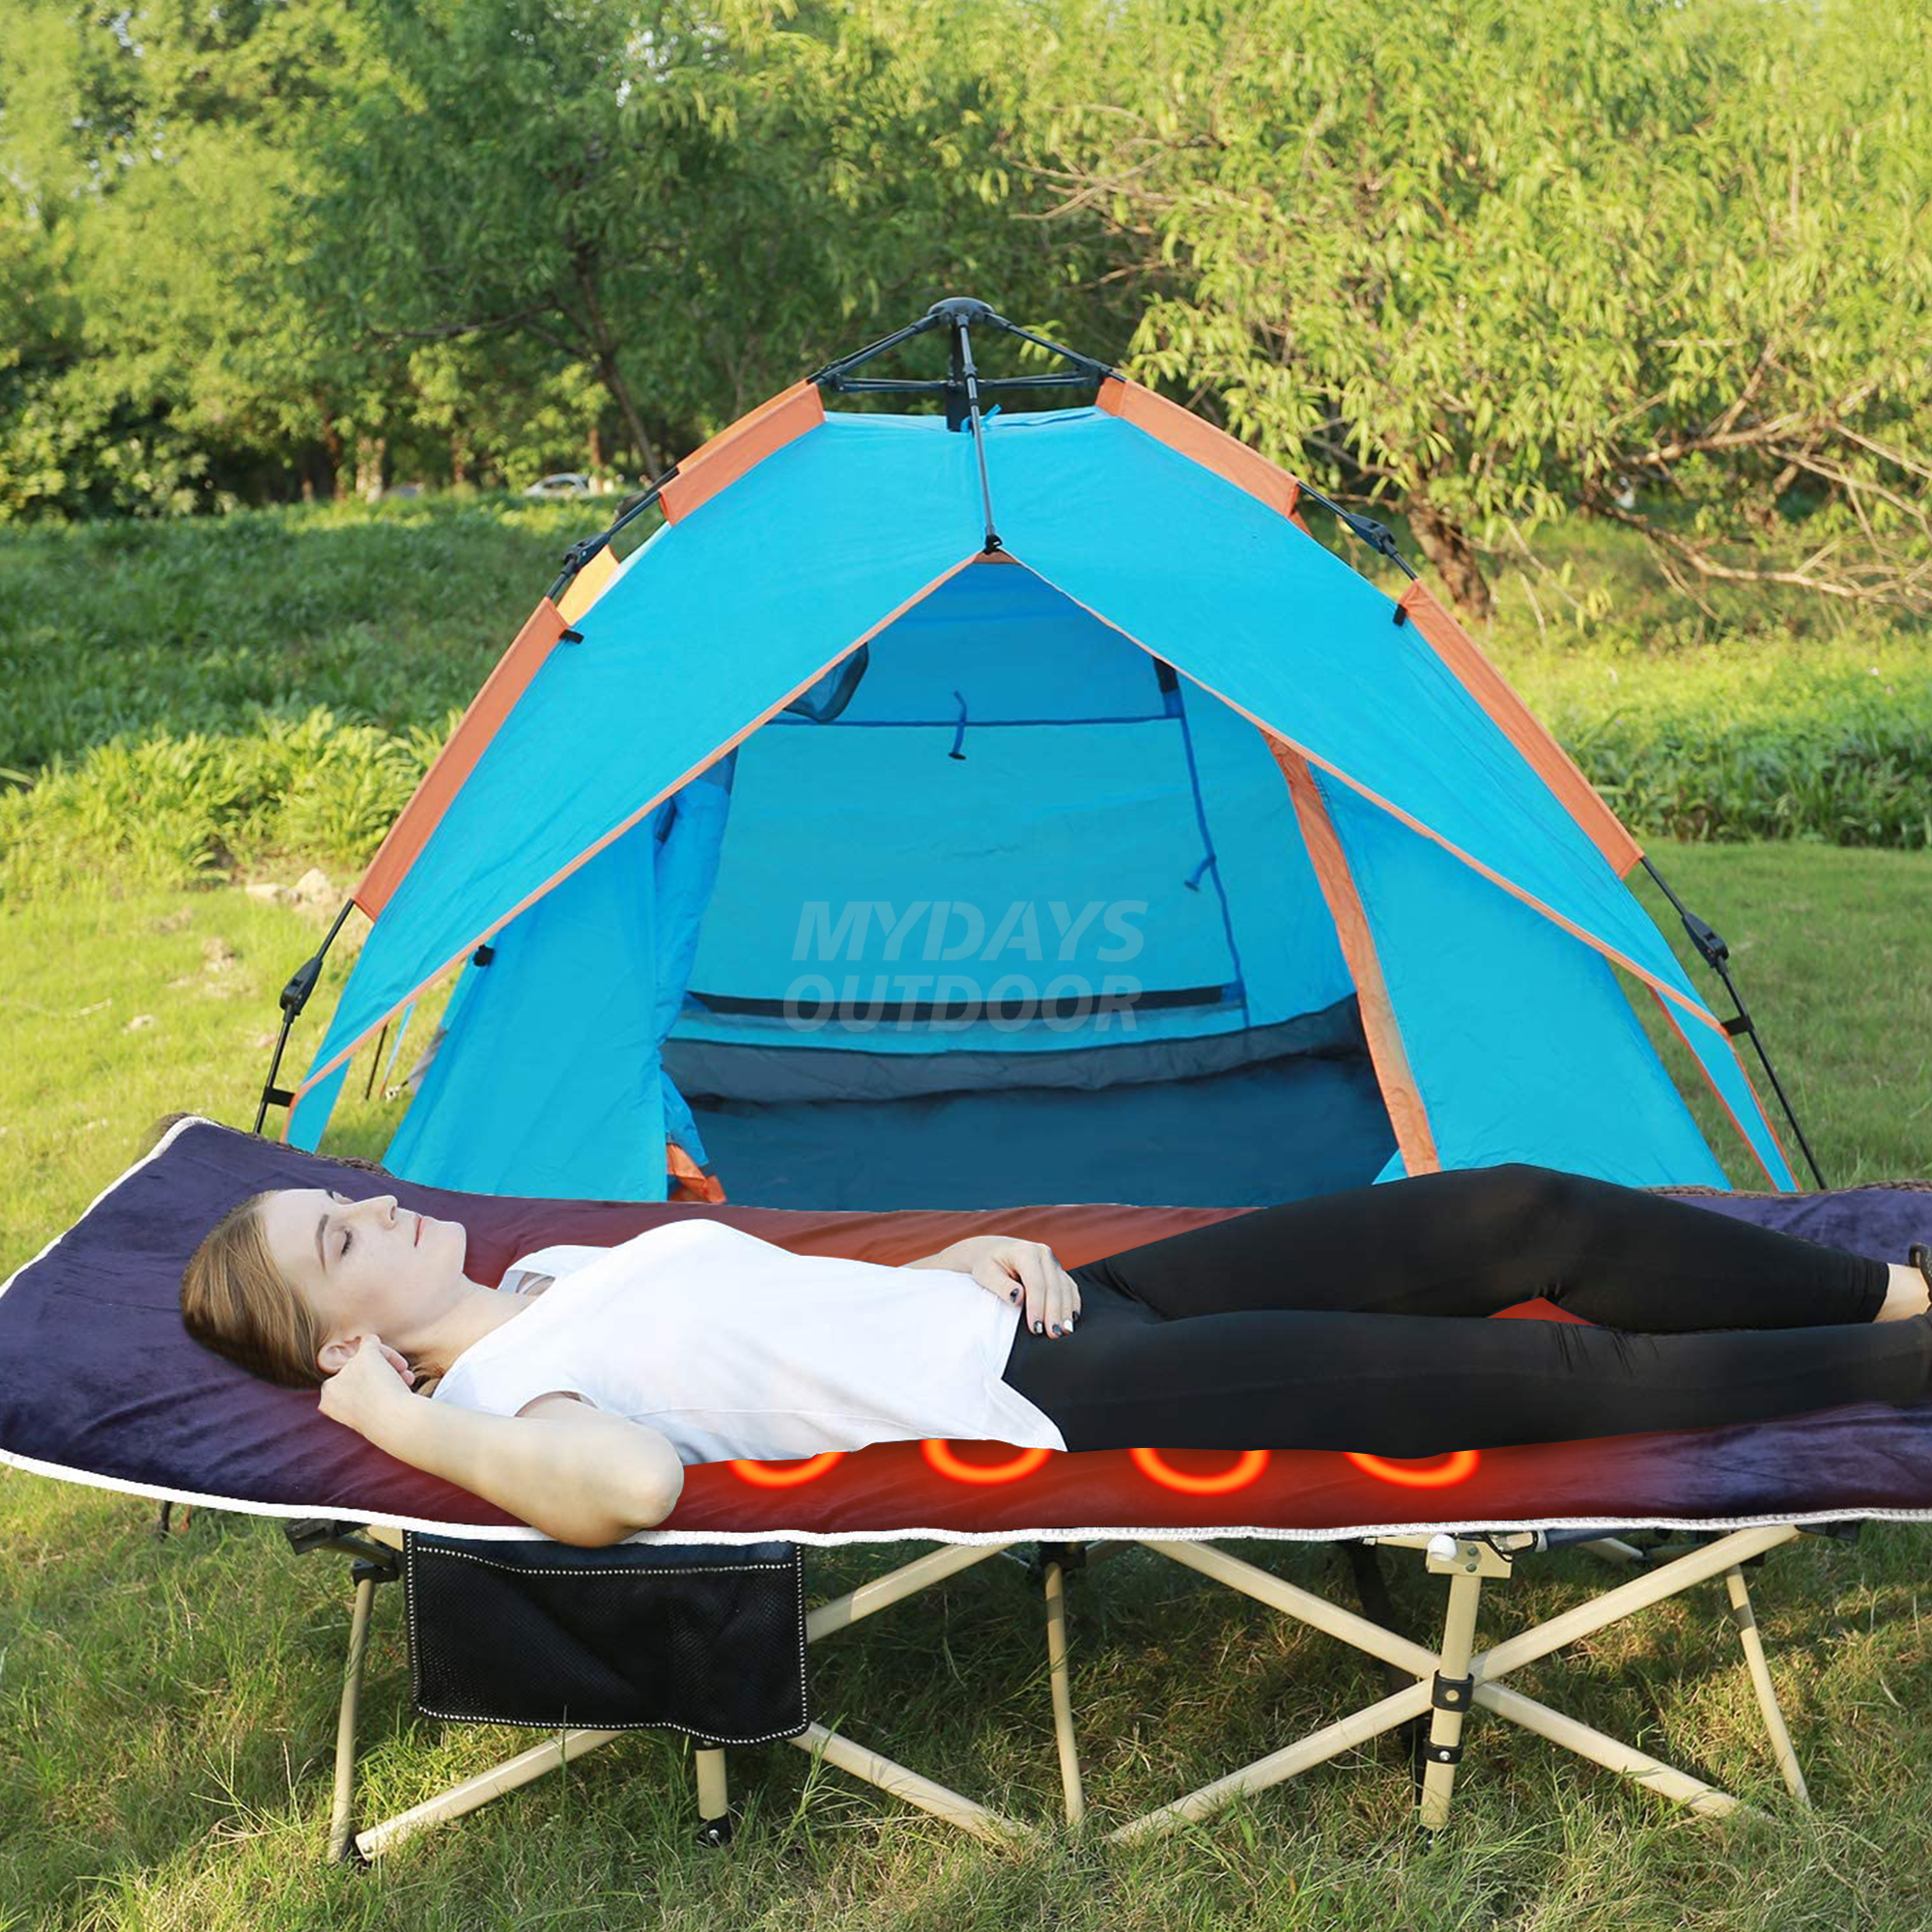 Camping Cot Pads Heated Soft Comfortable Cotton Sleeping Cot Mattress Pad MDSCM-30